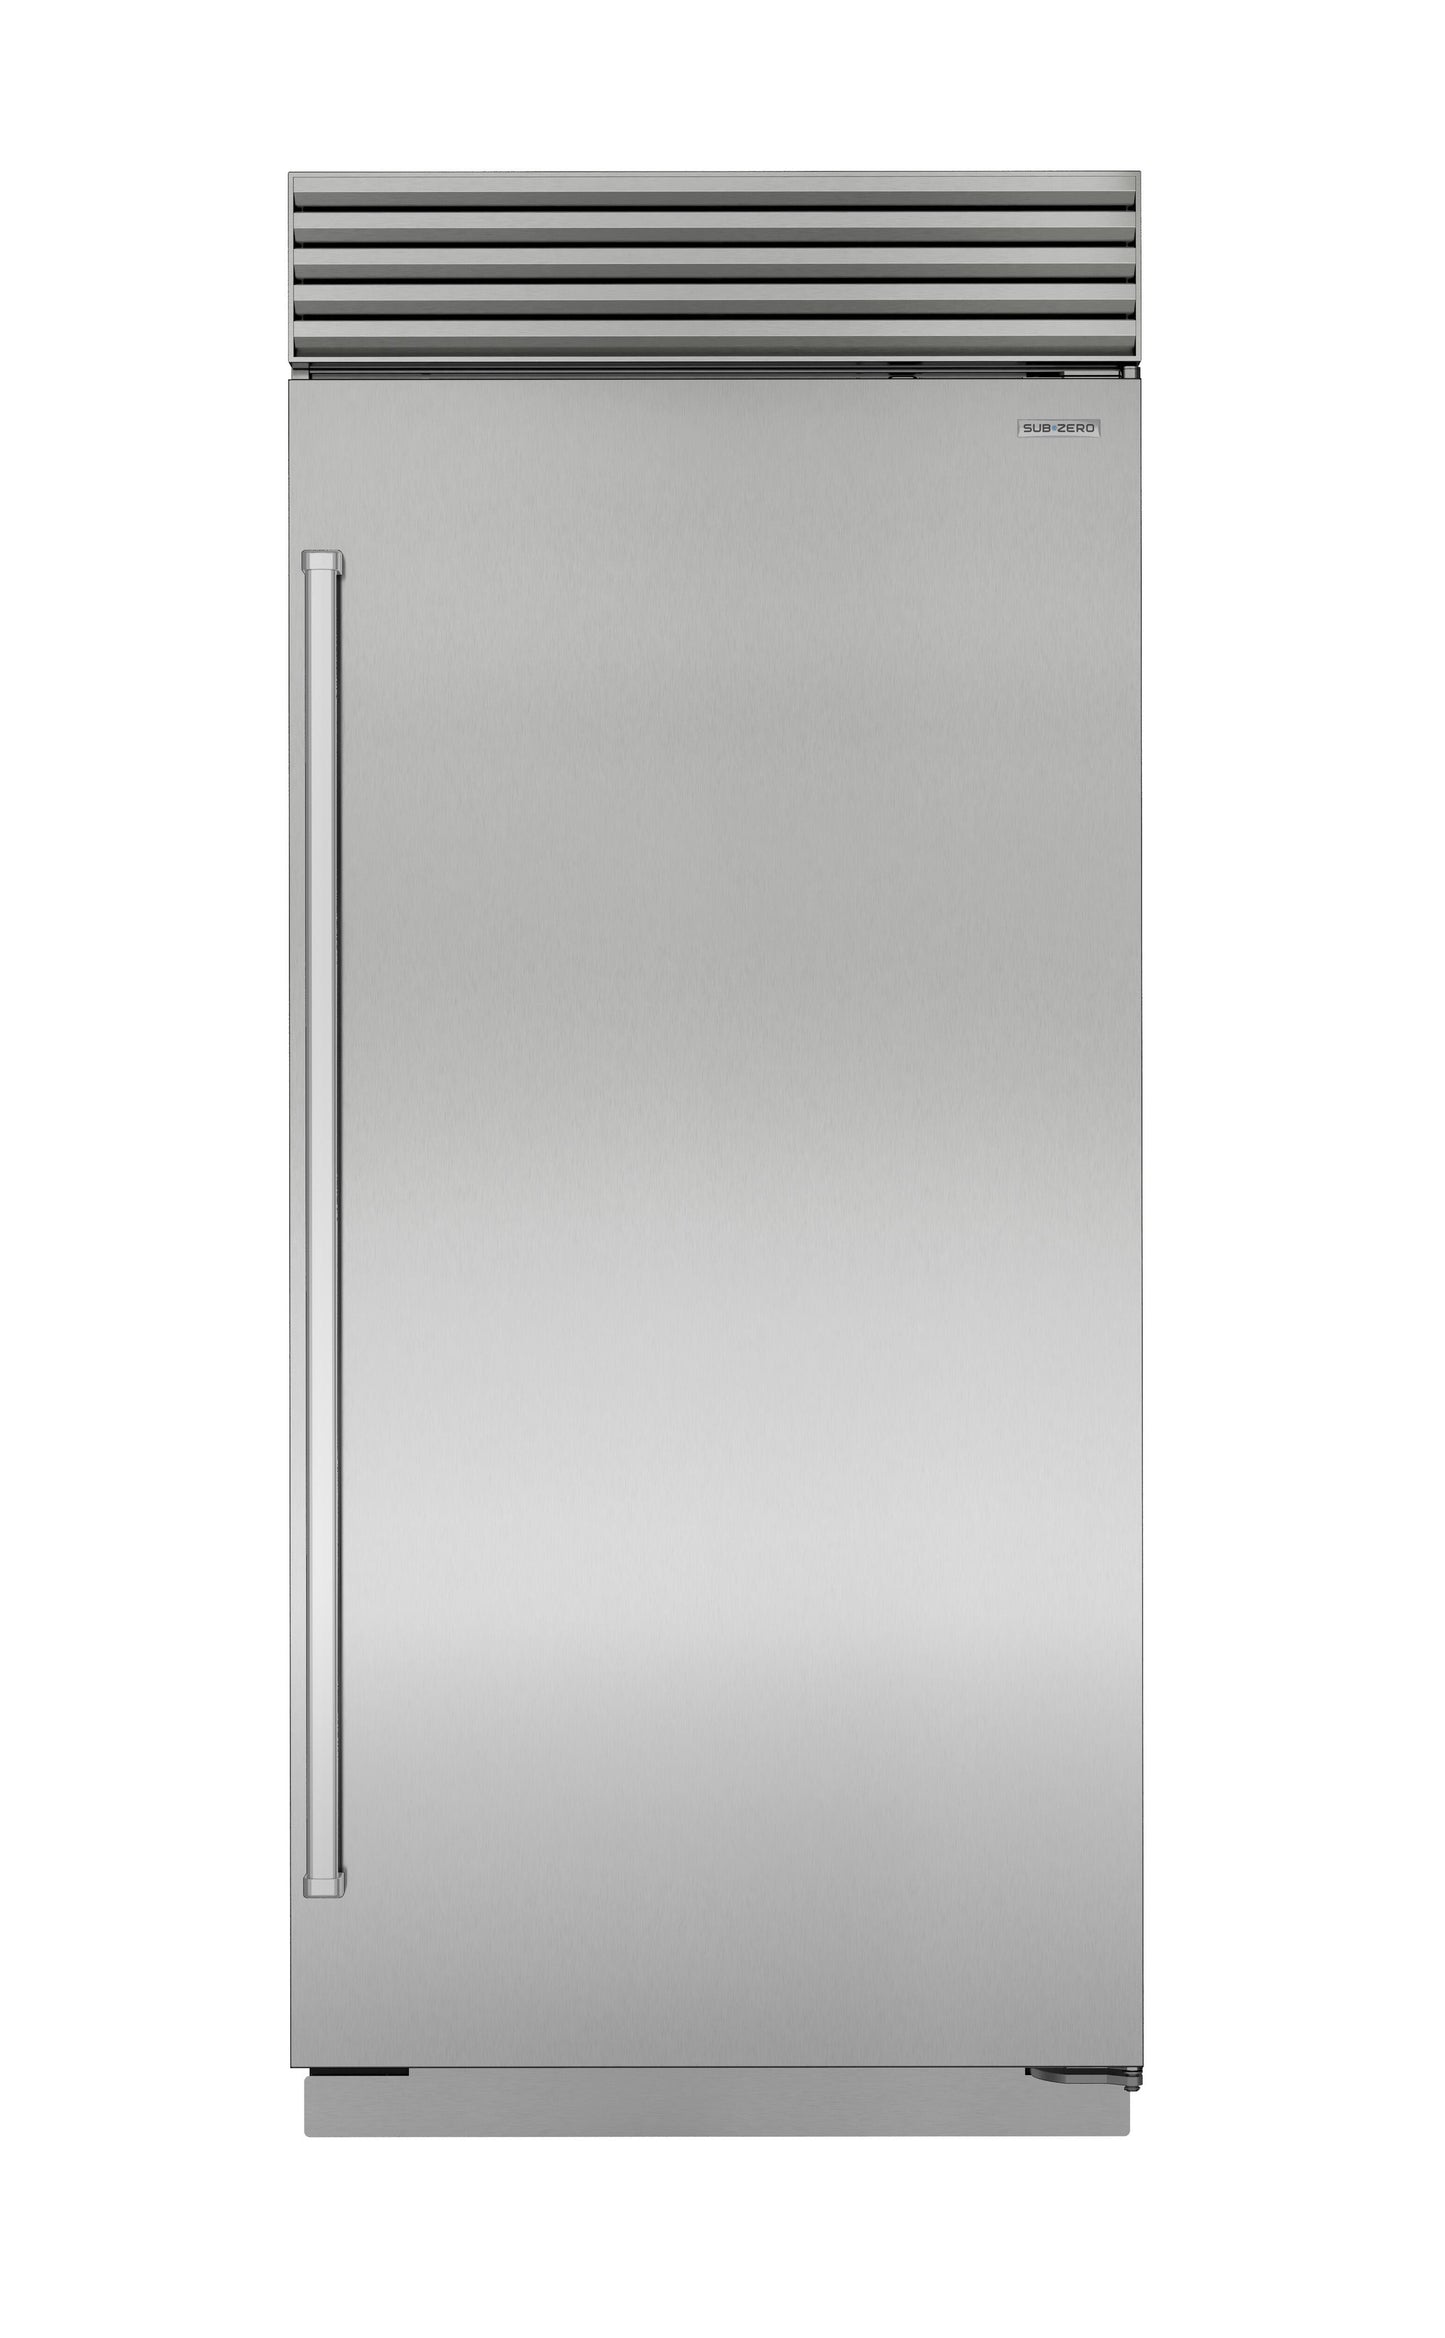 Sub-Zero CL3650RIDSTL 36" Classic Refrigerator With Internal Dispenser